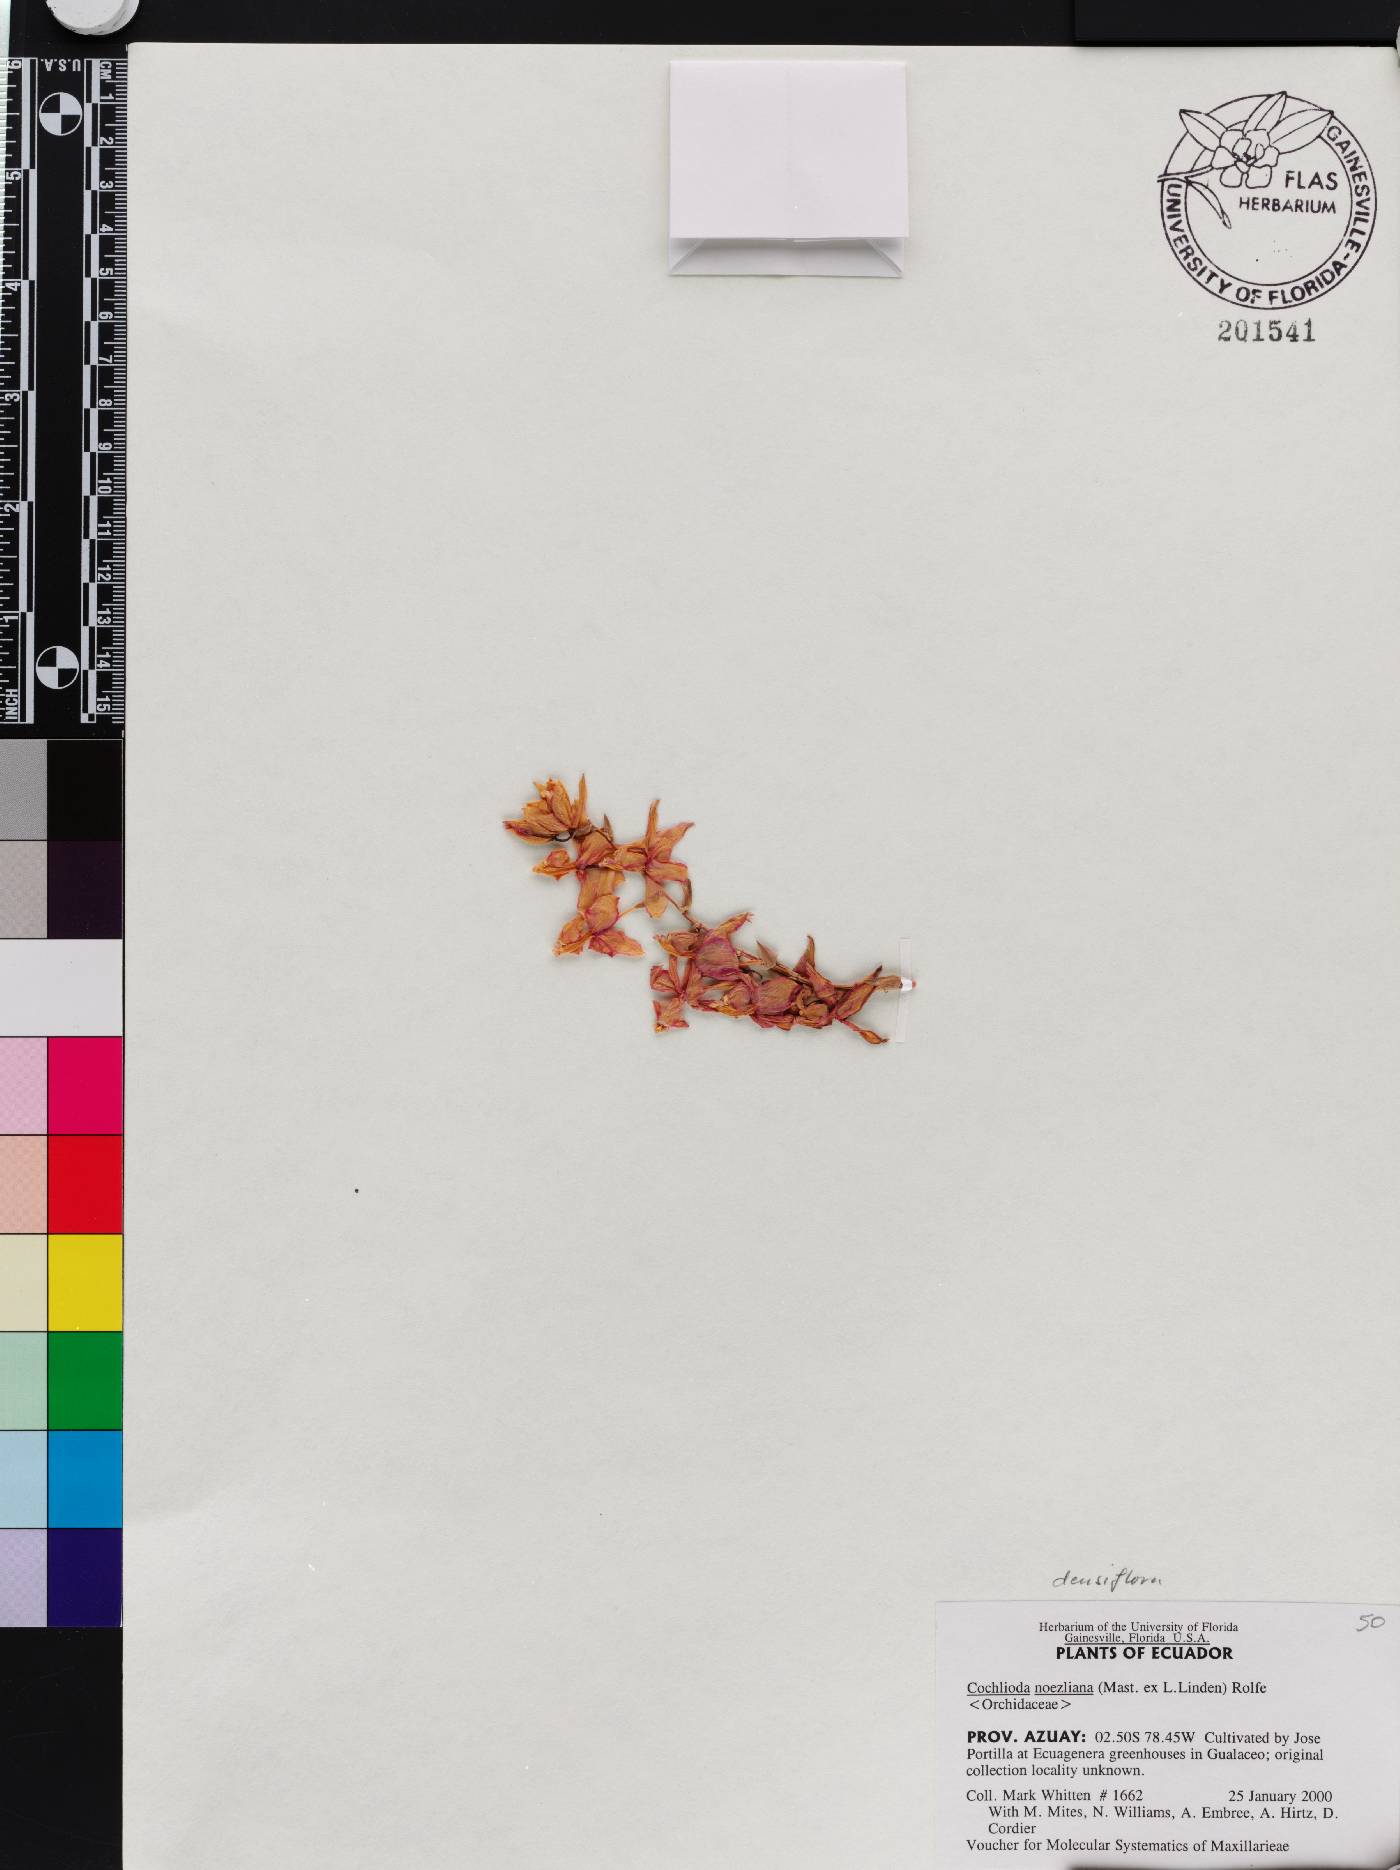 Oncidium noezlianum image